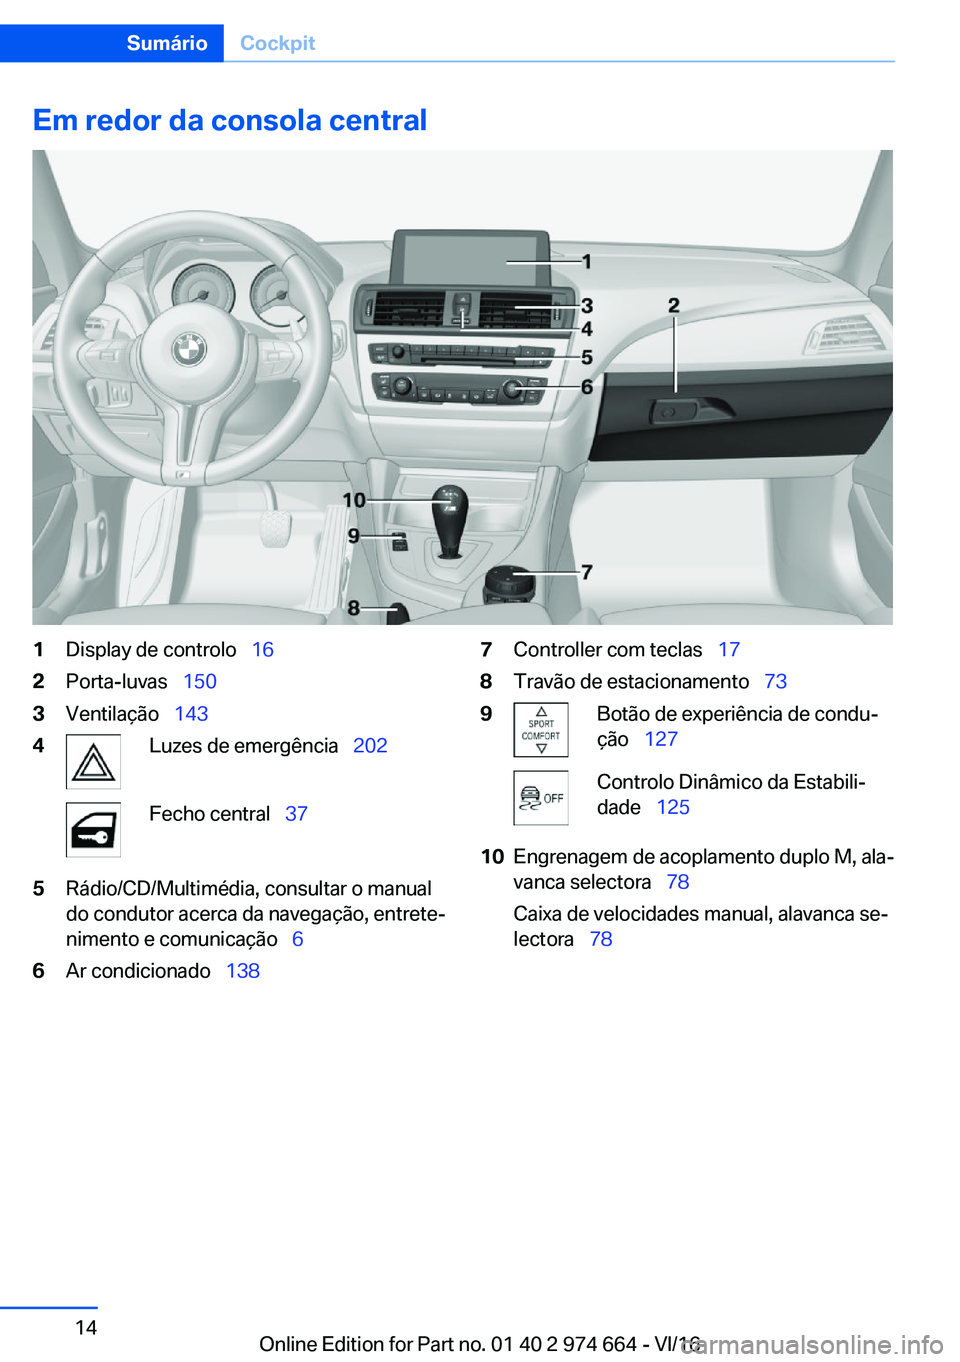 BMW M2 2017  Manual do condutor (in Portuguese) �E�m��r�e�d�o�r��d�a��c�o�n�s�o�l�a��c�e�n�t�r�a�l�1�D�i�s�p�l�a�y� �d�e� �c�o�n�t�r�o�l�o\_�1�6�2�P�o�r�t�a�-�l�u�v�a�s\_�1�5�0�3�V�e�n�t�i�l�a�